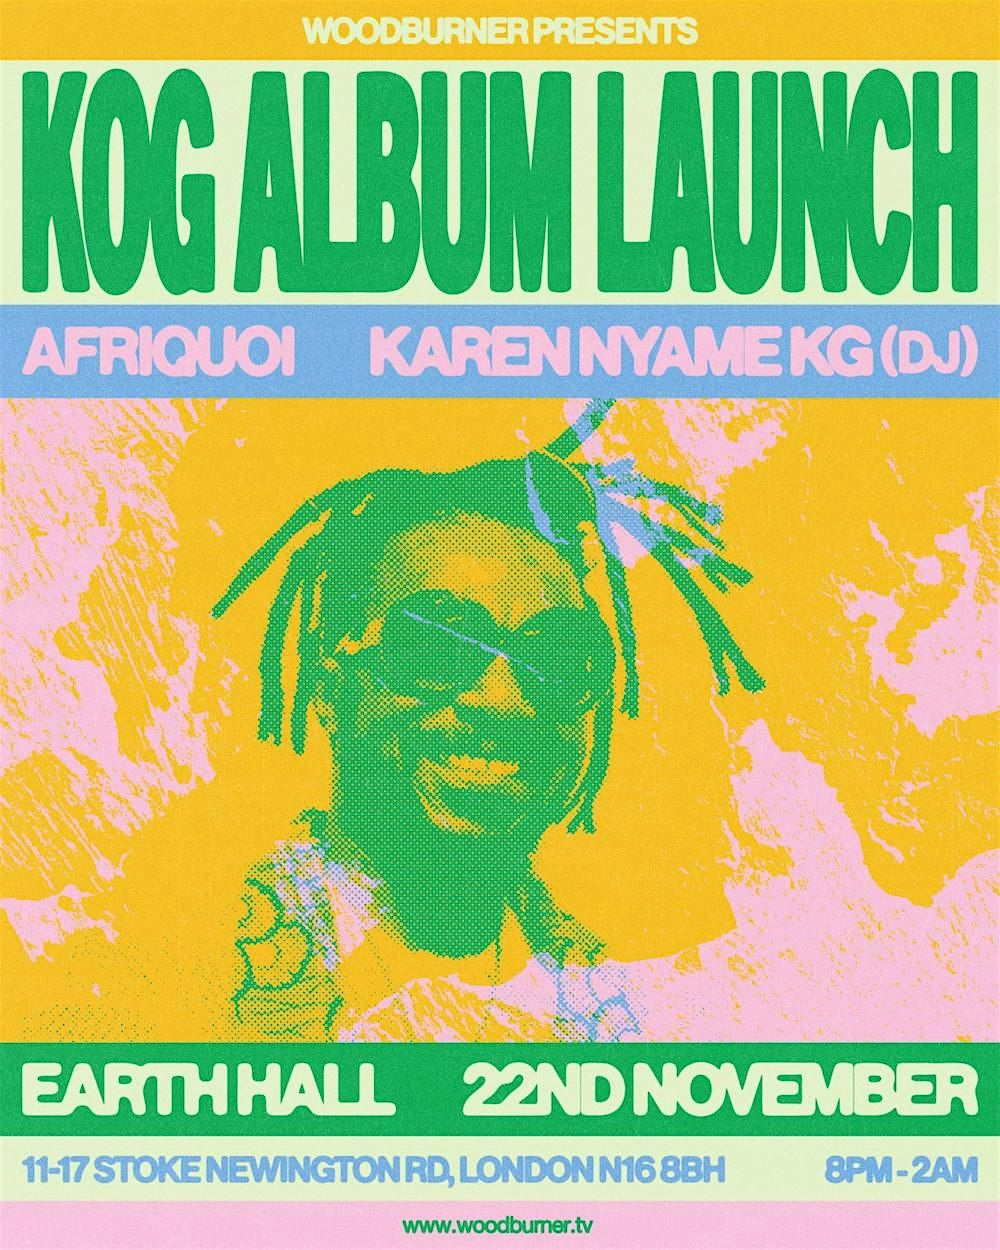 K.O.G Album Launch + Afriquoi + Karen Nyame KG (DJ)